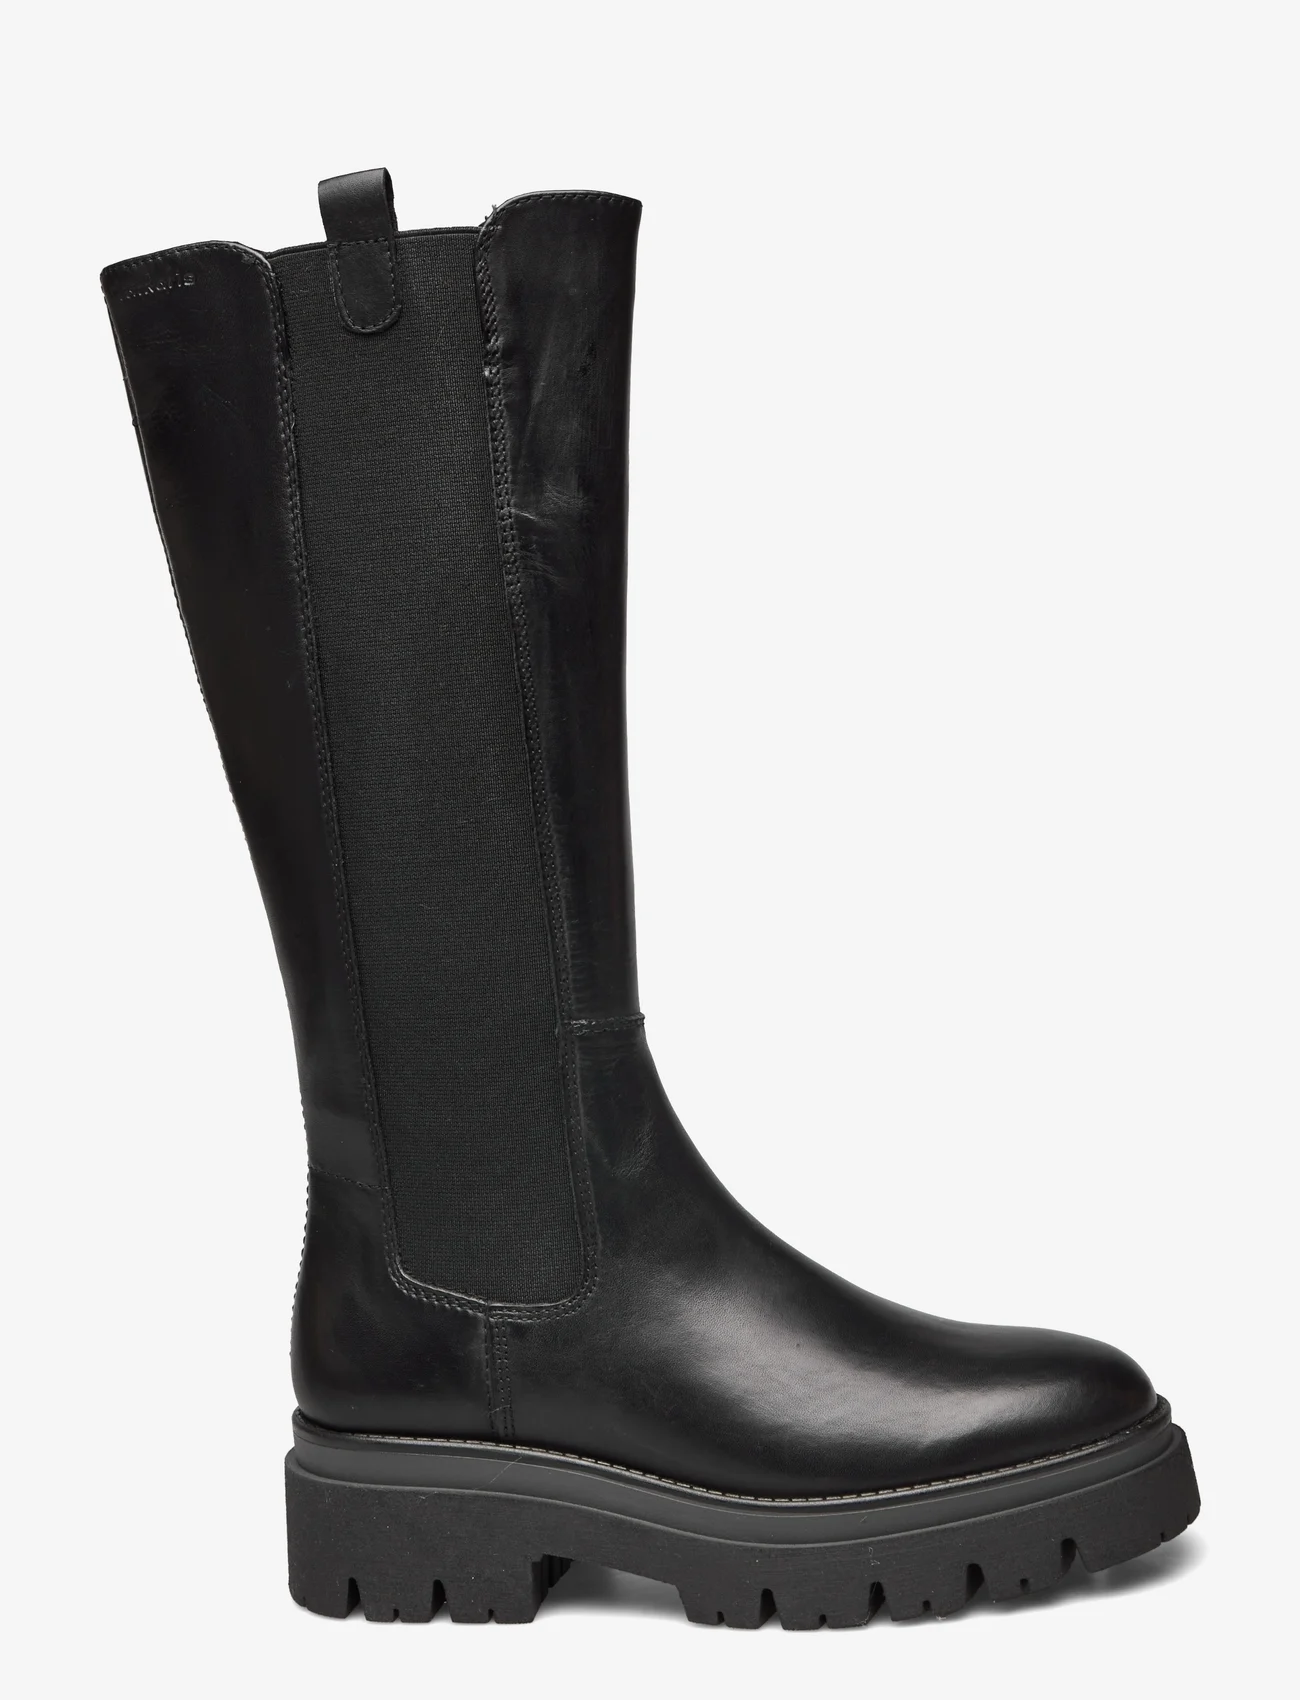 Tamaris - Women Boots - knee high boots - black leather - 1